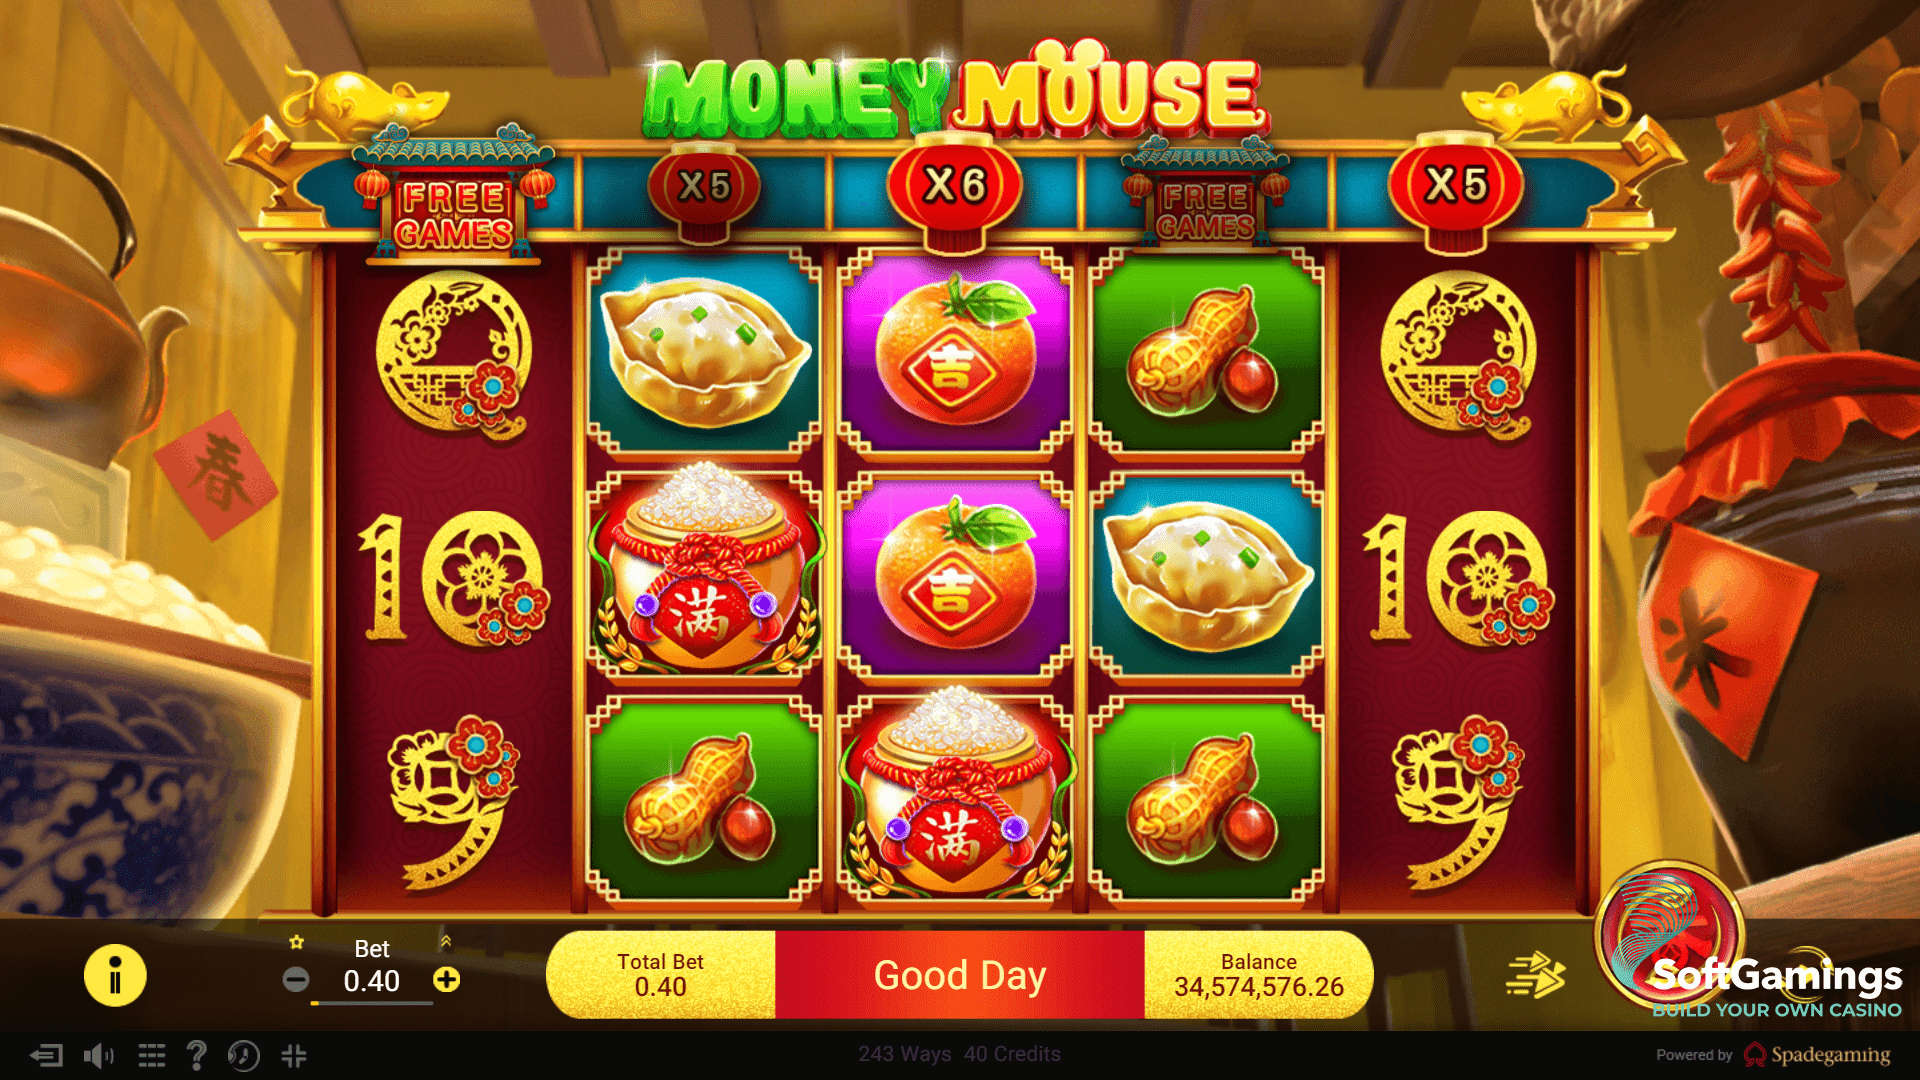 Money Mouse - Spadegaming Games catalogue | SoftGamings